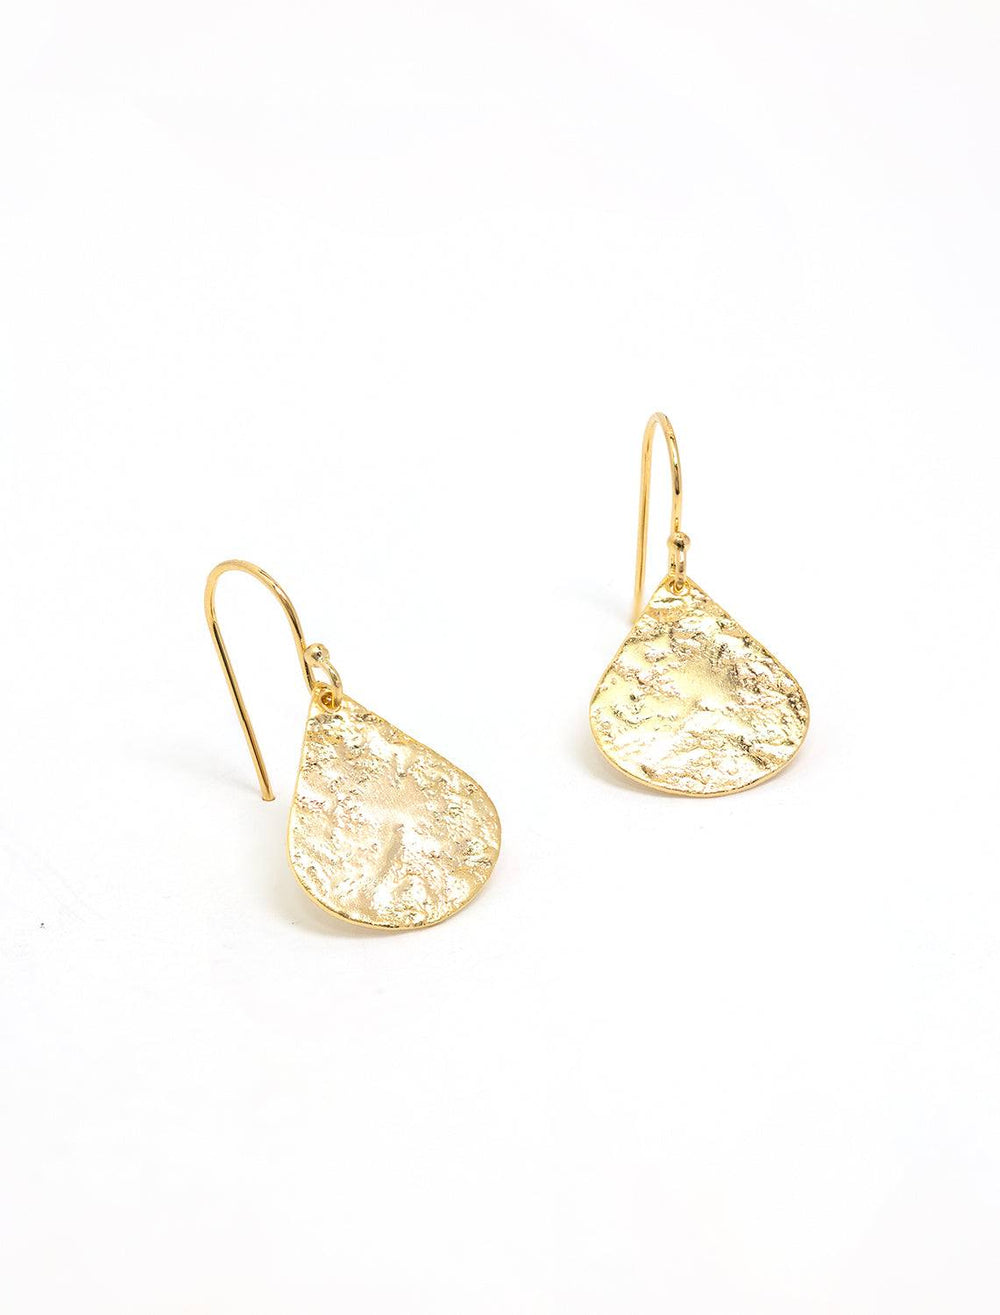 AV Max's textured teardrop earrings in gold.